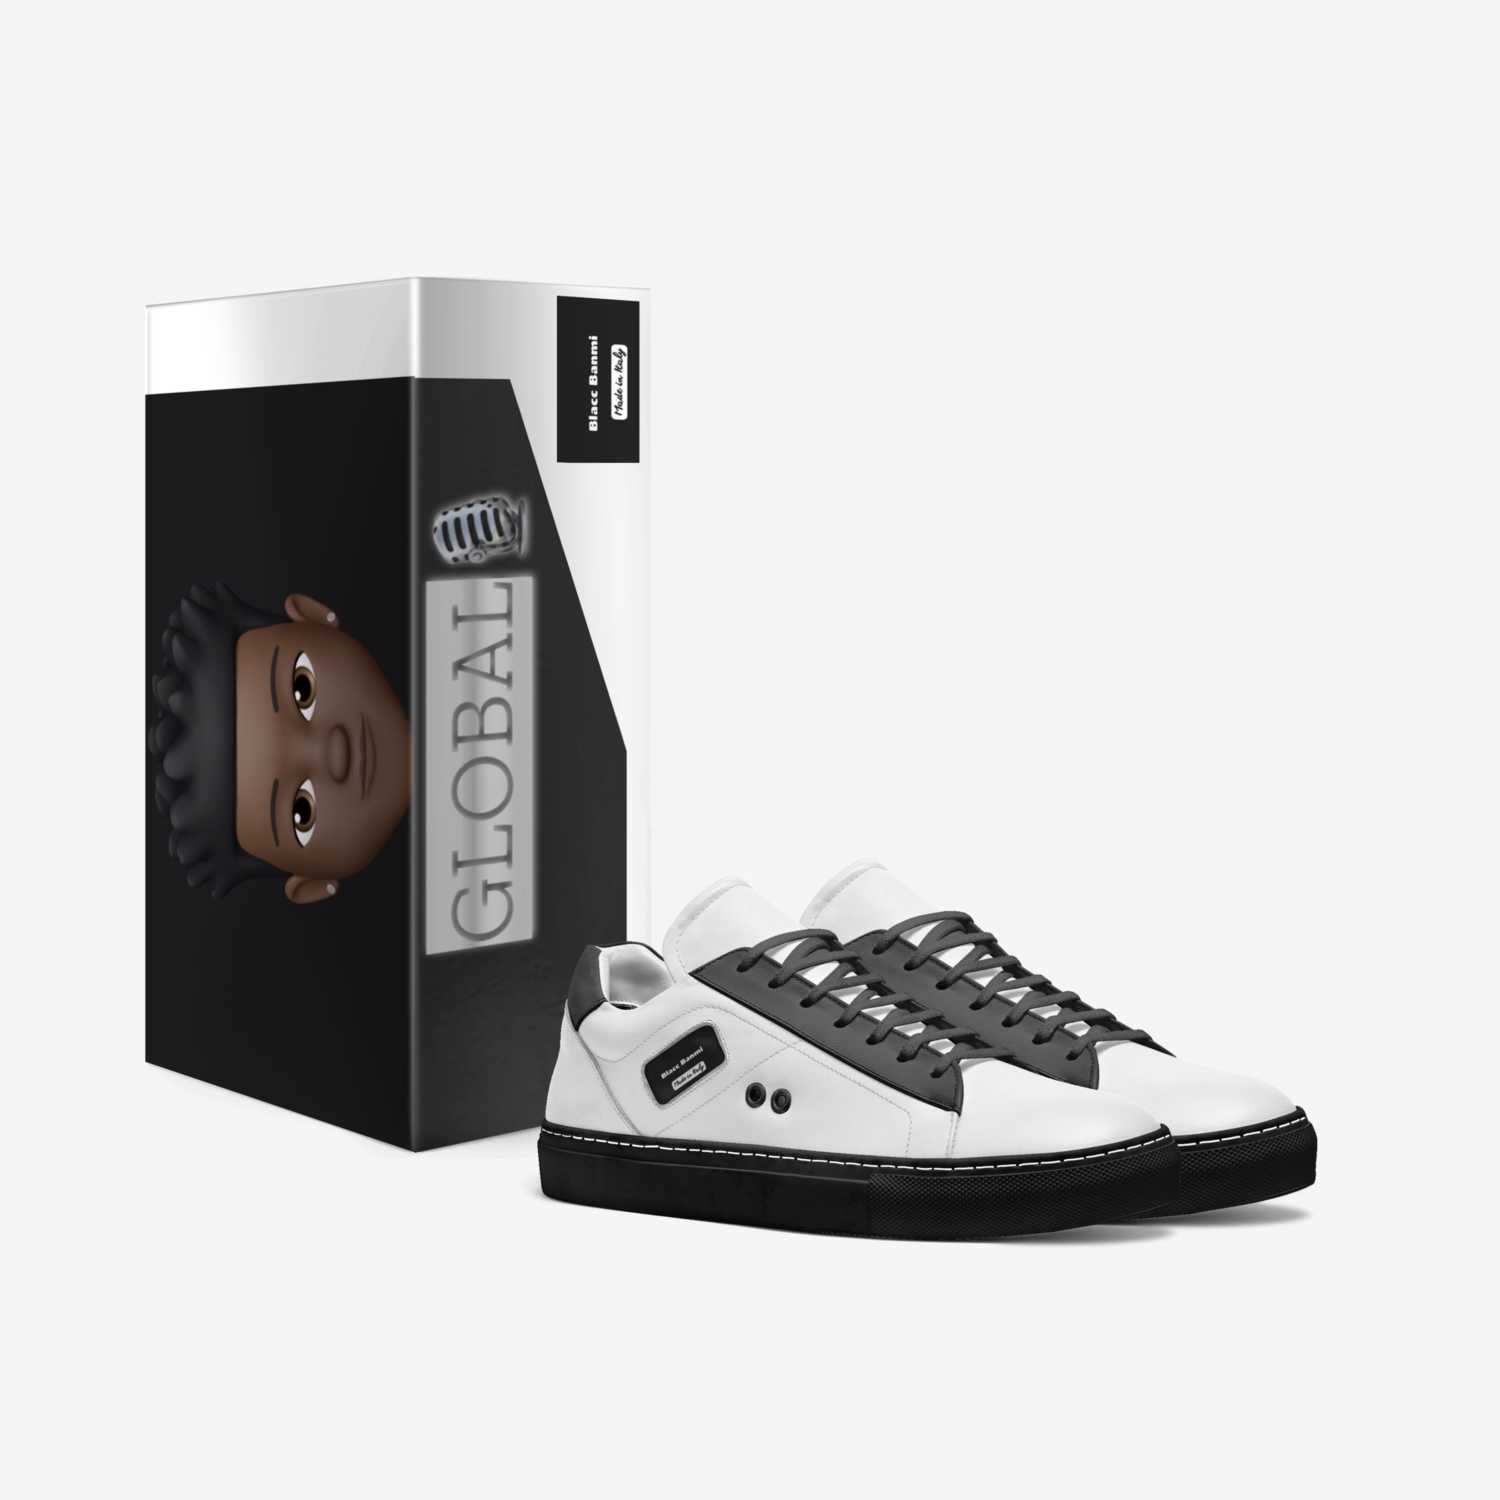 Blacc Banmi  custom made in Italy shoes by Wahkun Banmi | Box view